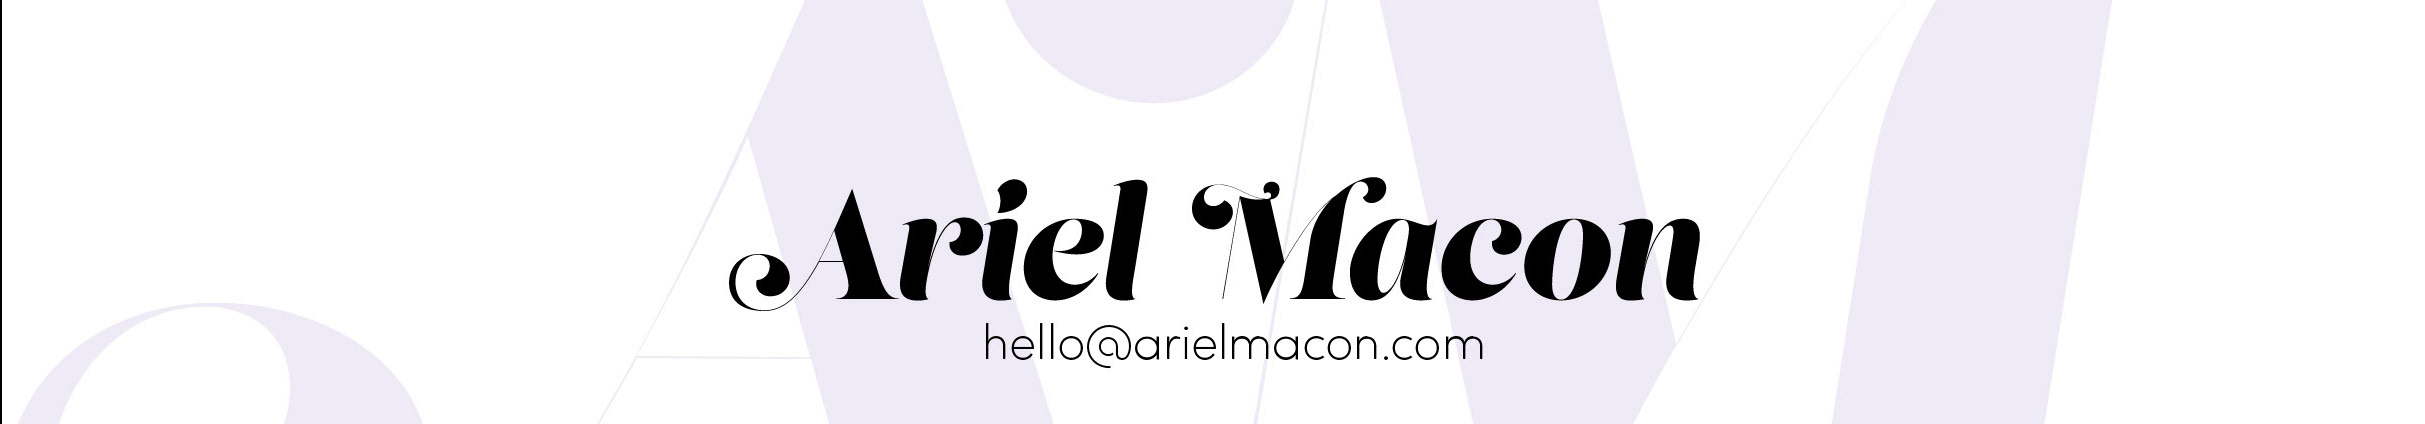 Ariel Macons profilbanner